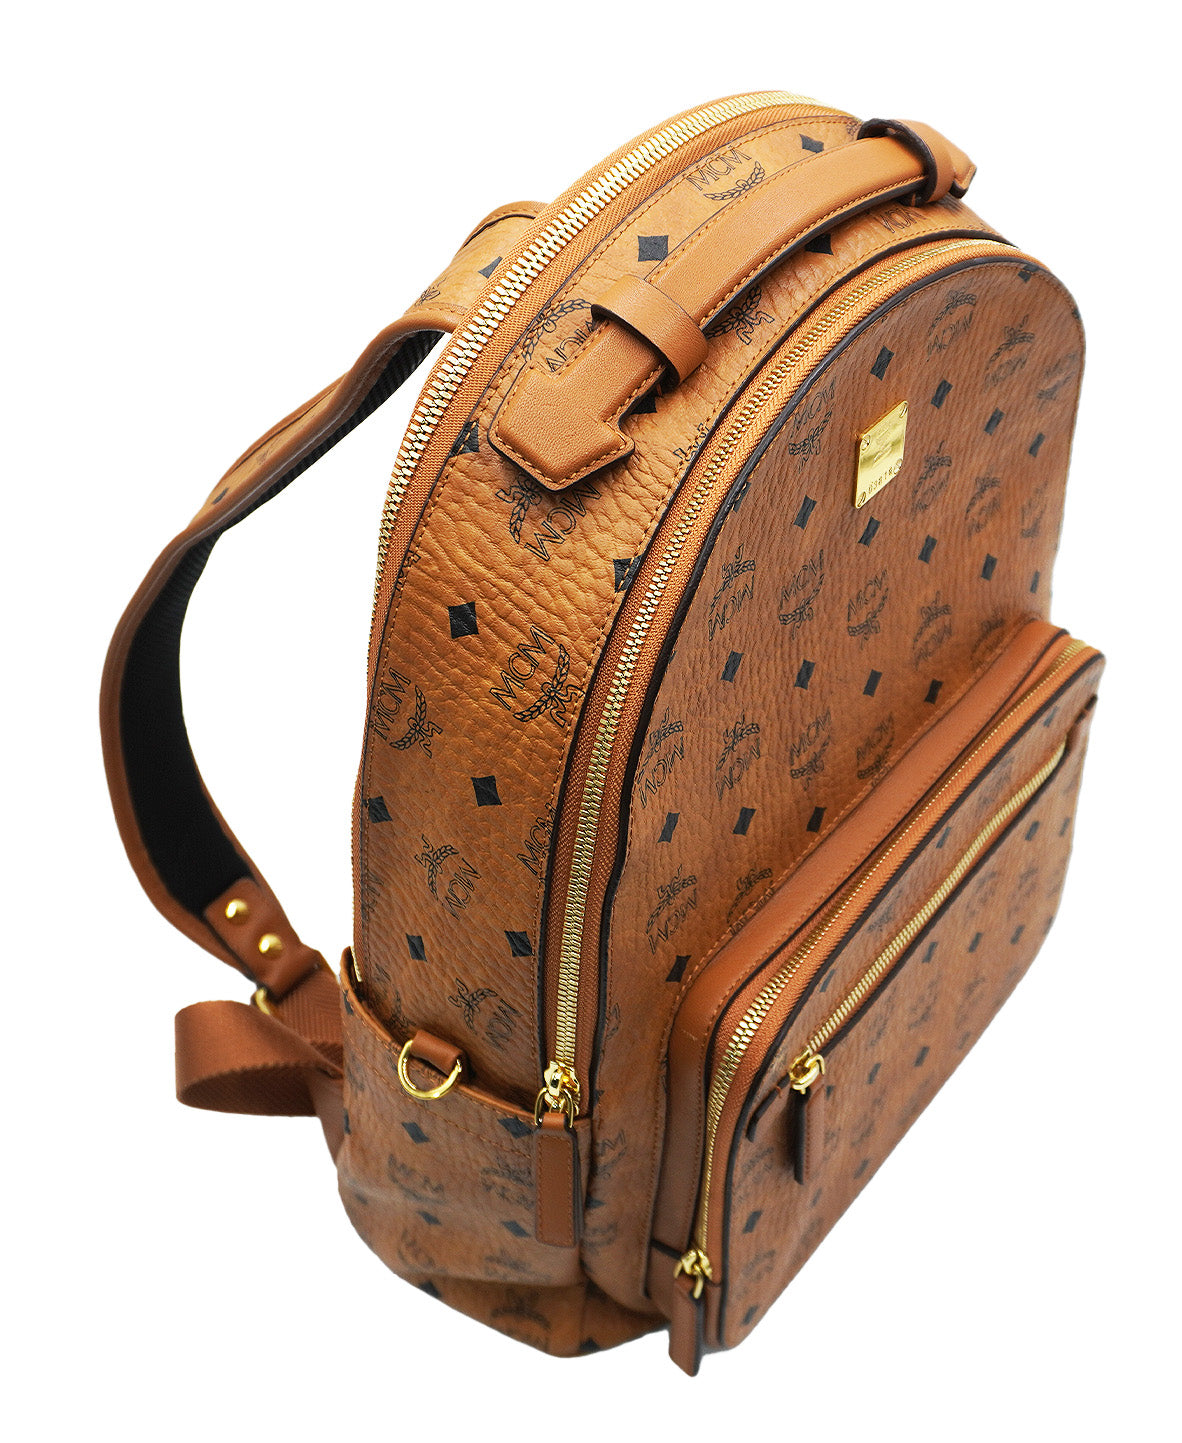 Medium Stark Backpack in Visetos Cognac